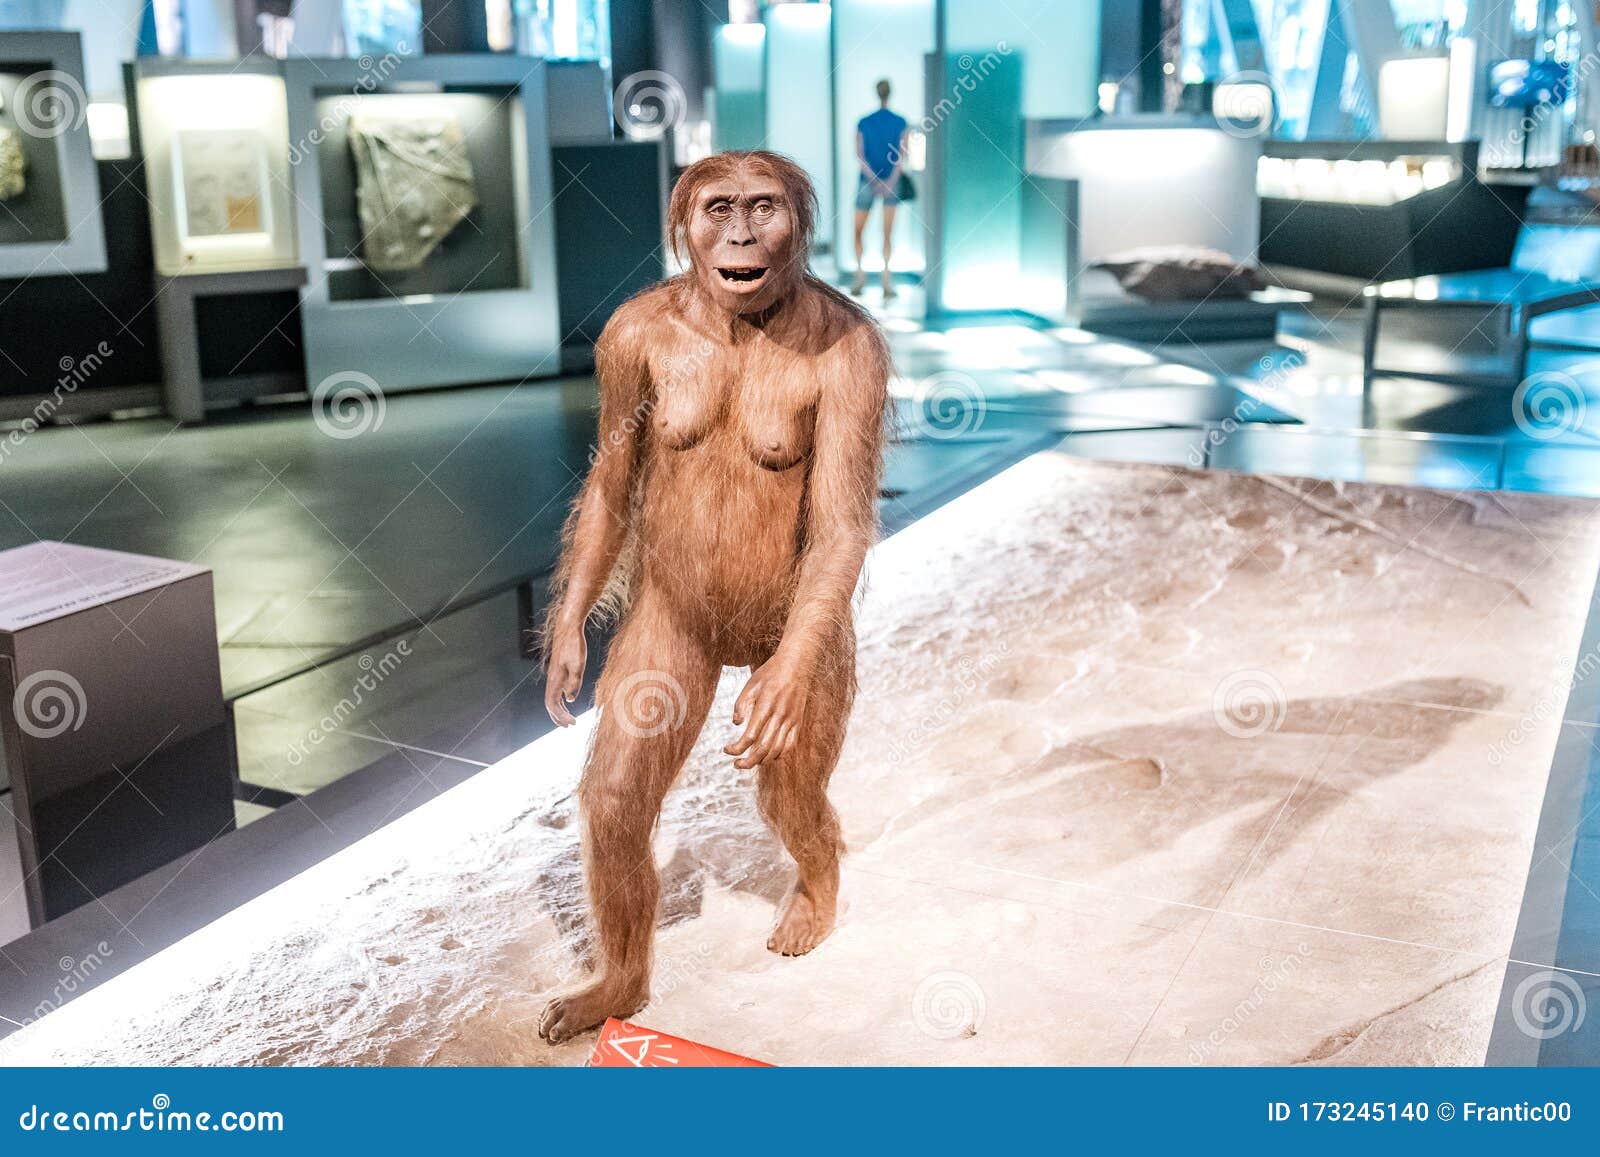 australopithecus-female-prehistoric-woman-museum-exhibition-july-cosmocaixa-barcelona-spain-173245140.jpg